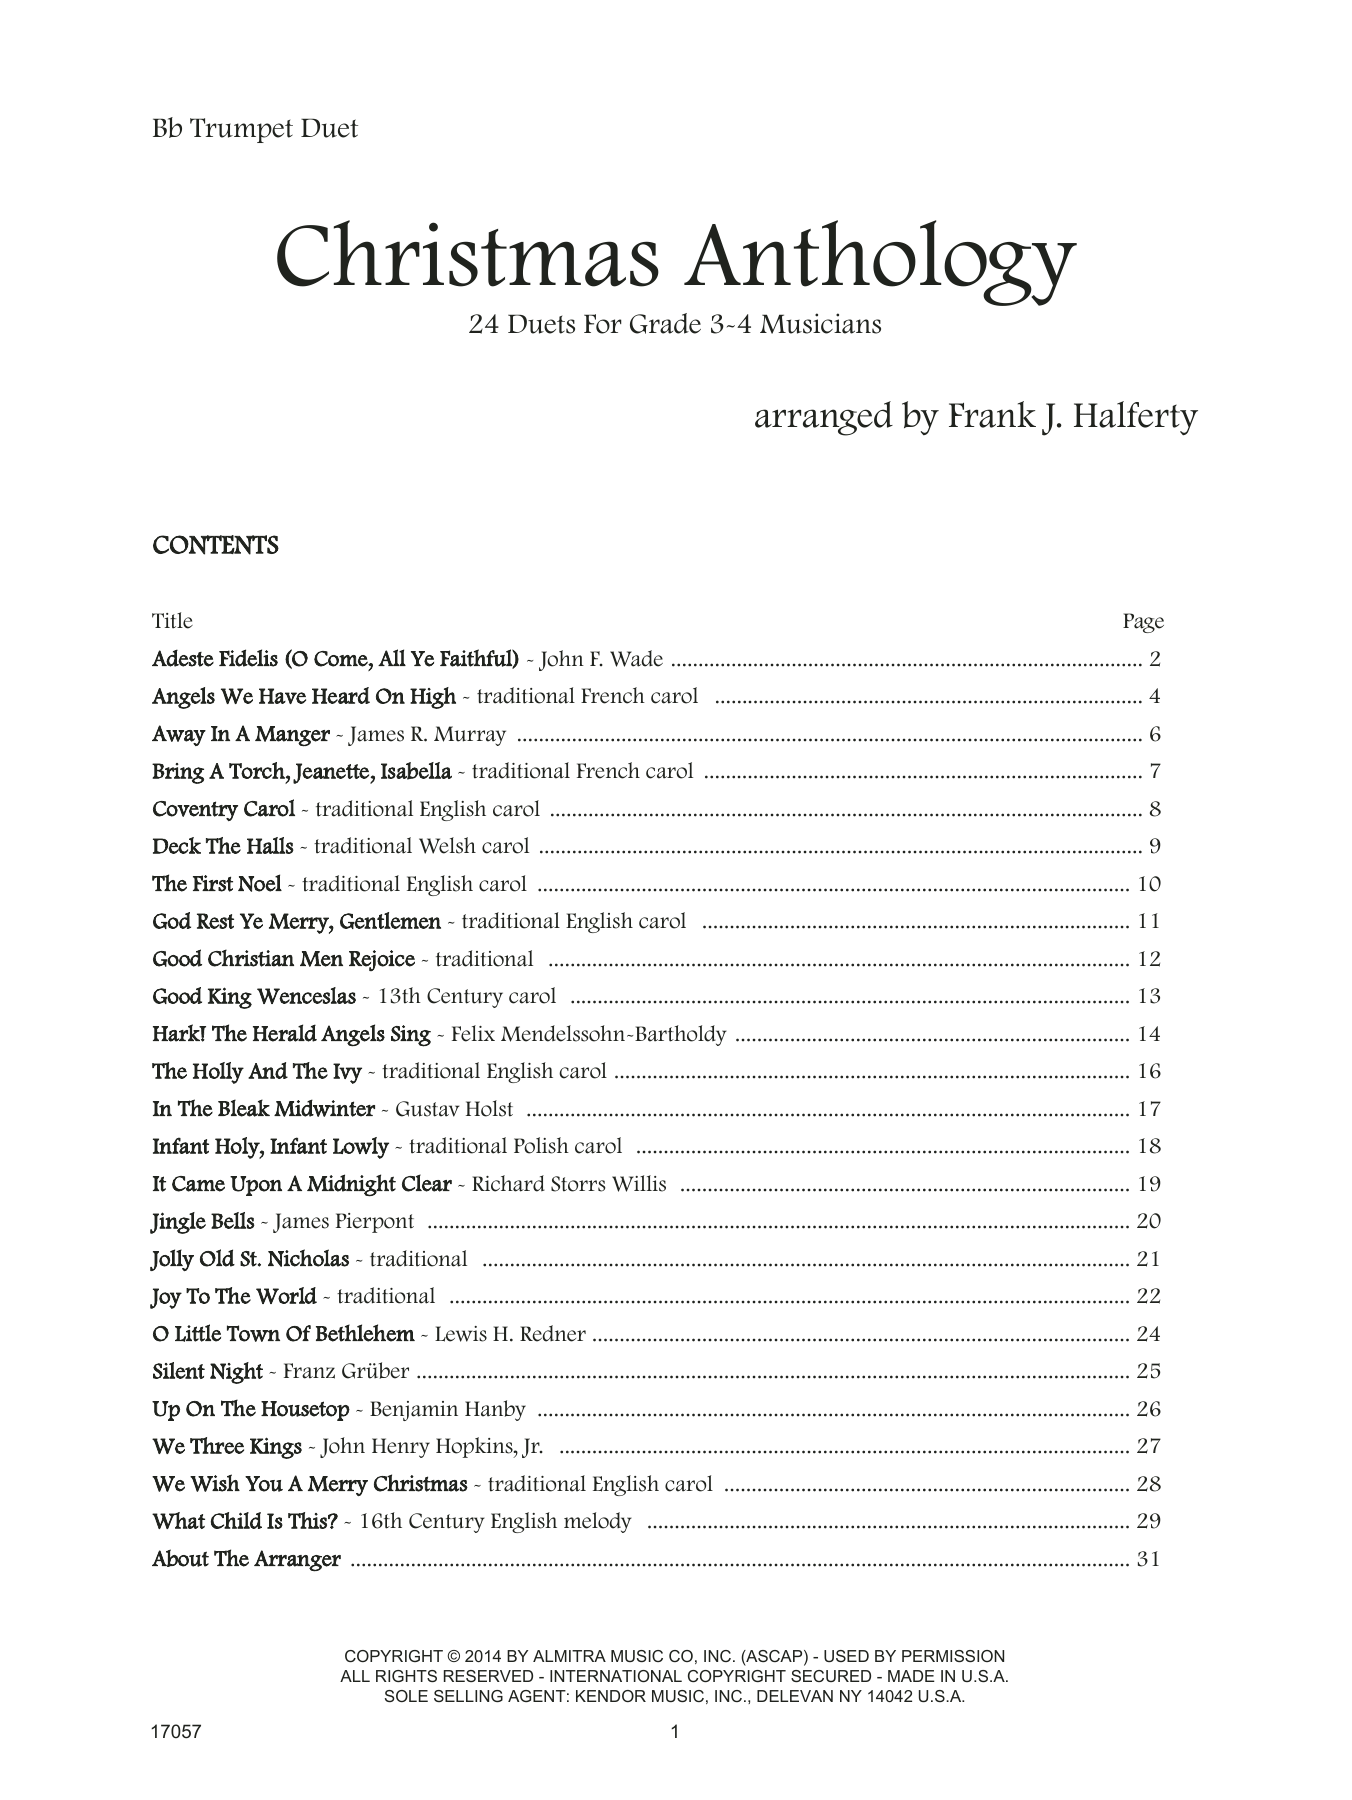 Christmas Anthology (24 Duets For Grade 3-4 Musicians) (Brass Ensemble) von Frank J. Halferty